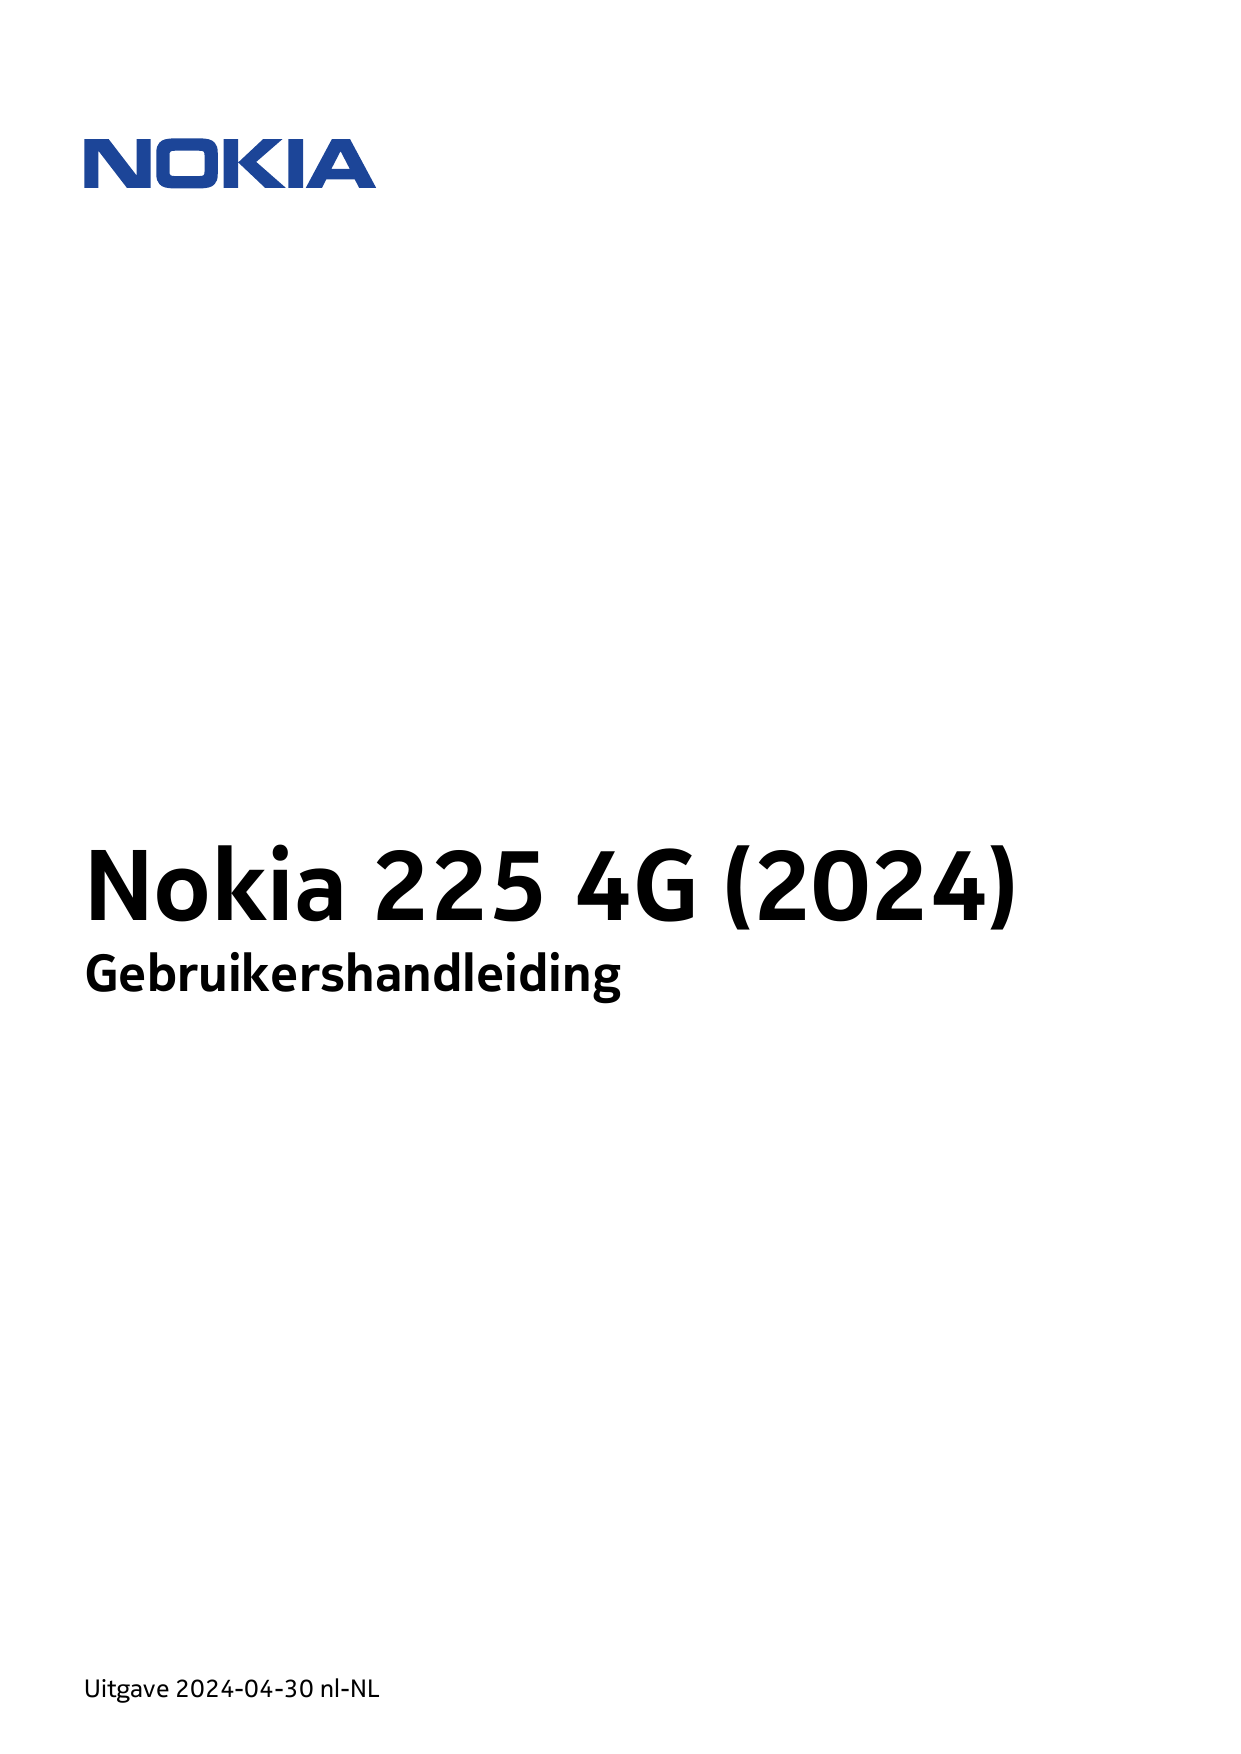 Nokia 225 4G (2024)GebruikershandleidingUitgave 2024-04-30 nl-NL